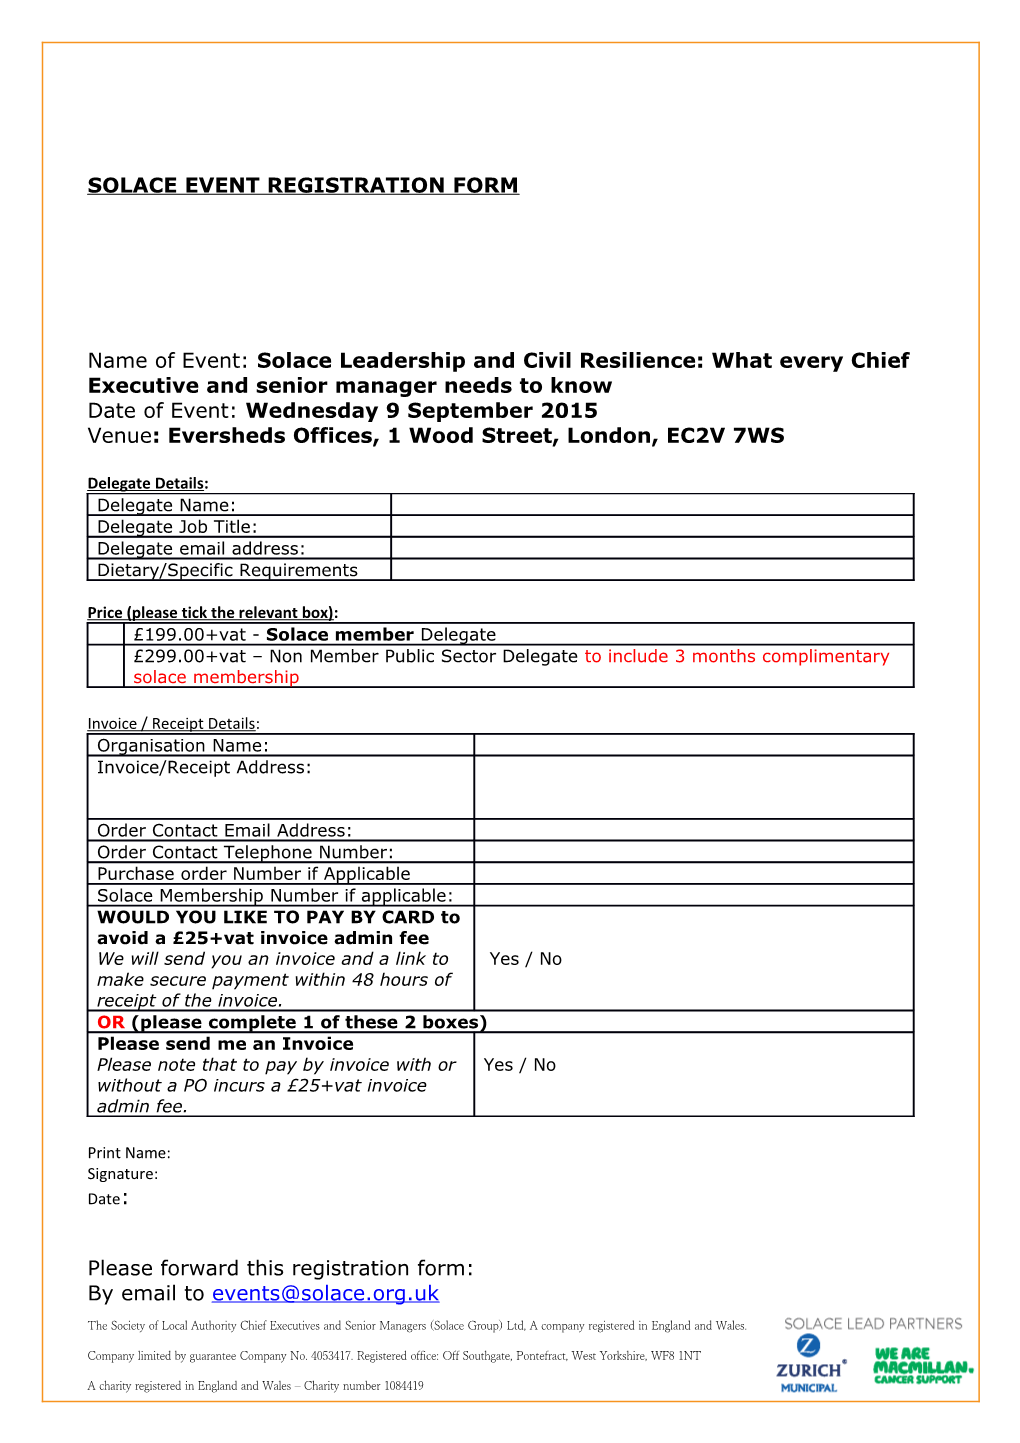 Solace Event Registration Form